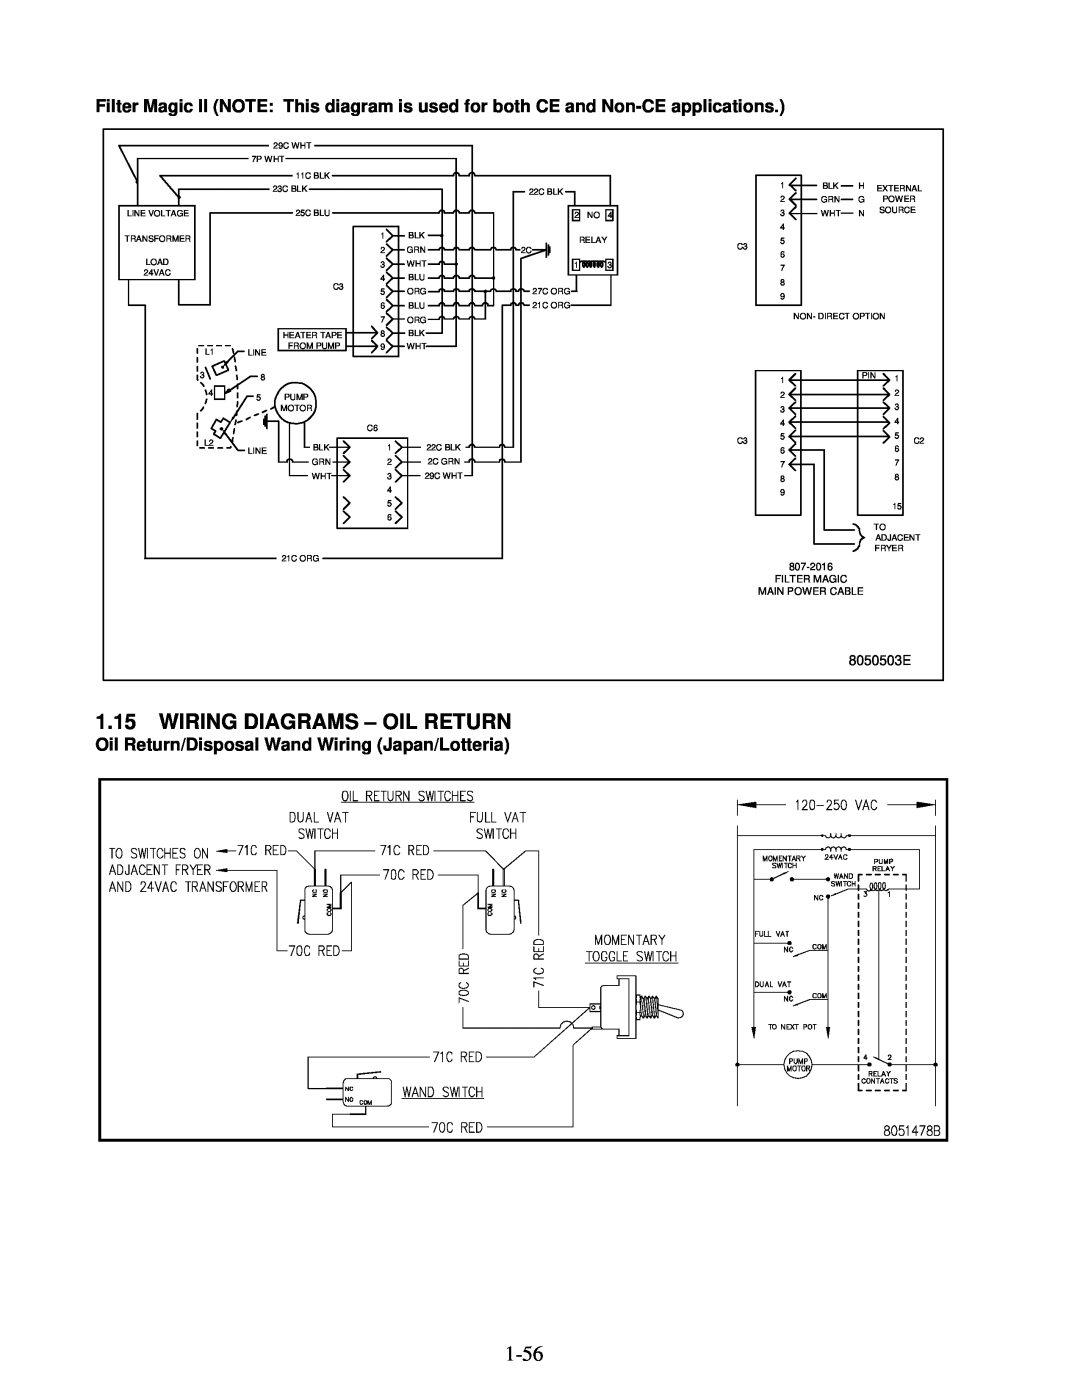 Frymaster H50 Series manual 1.15WIRING DIAGRAMS – OIL RETURN, Oil Return/Disposal Wand Wiring Japan/Lotteria 